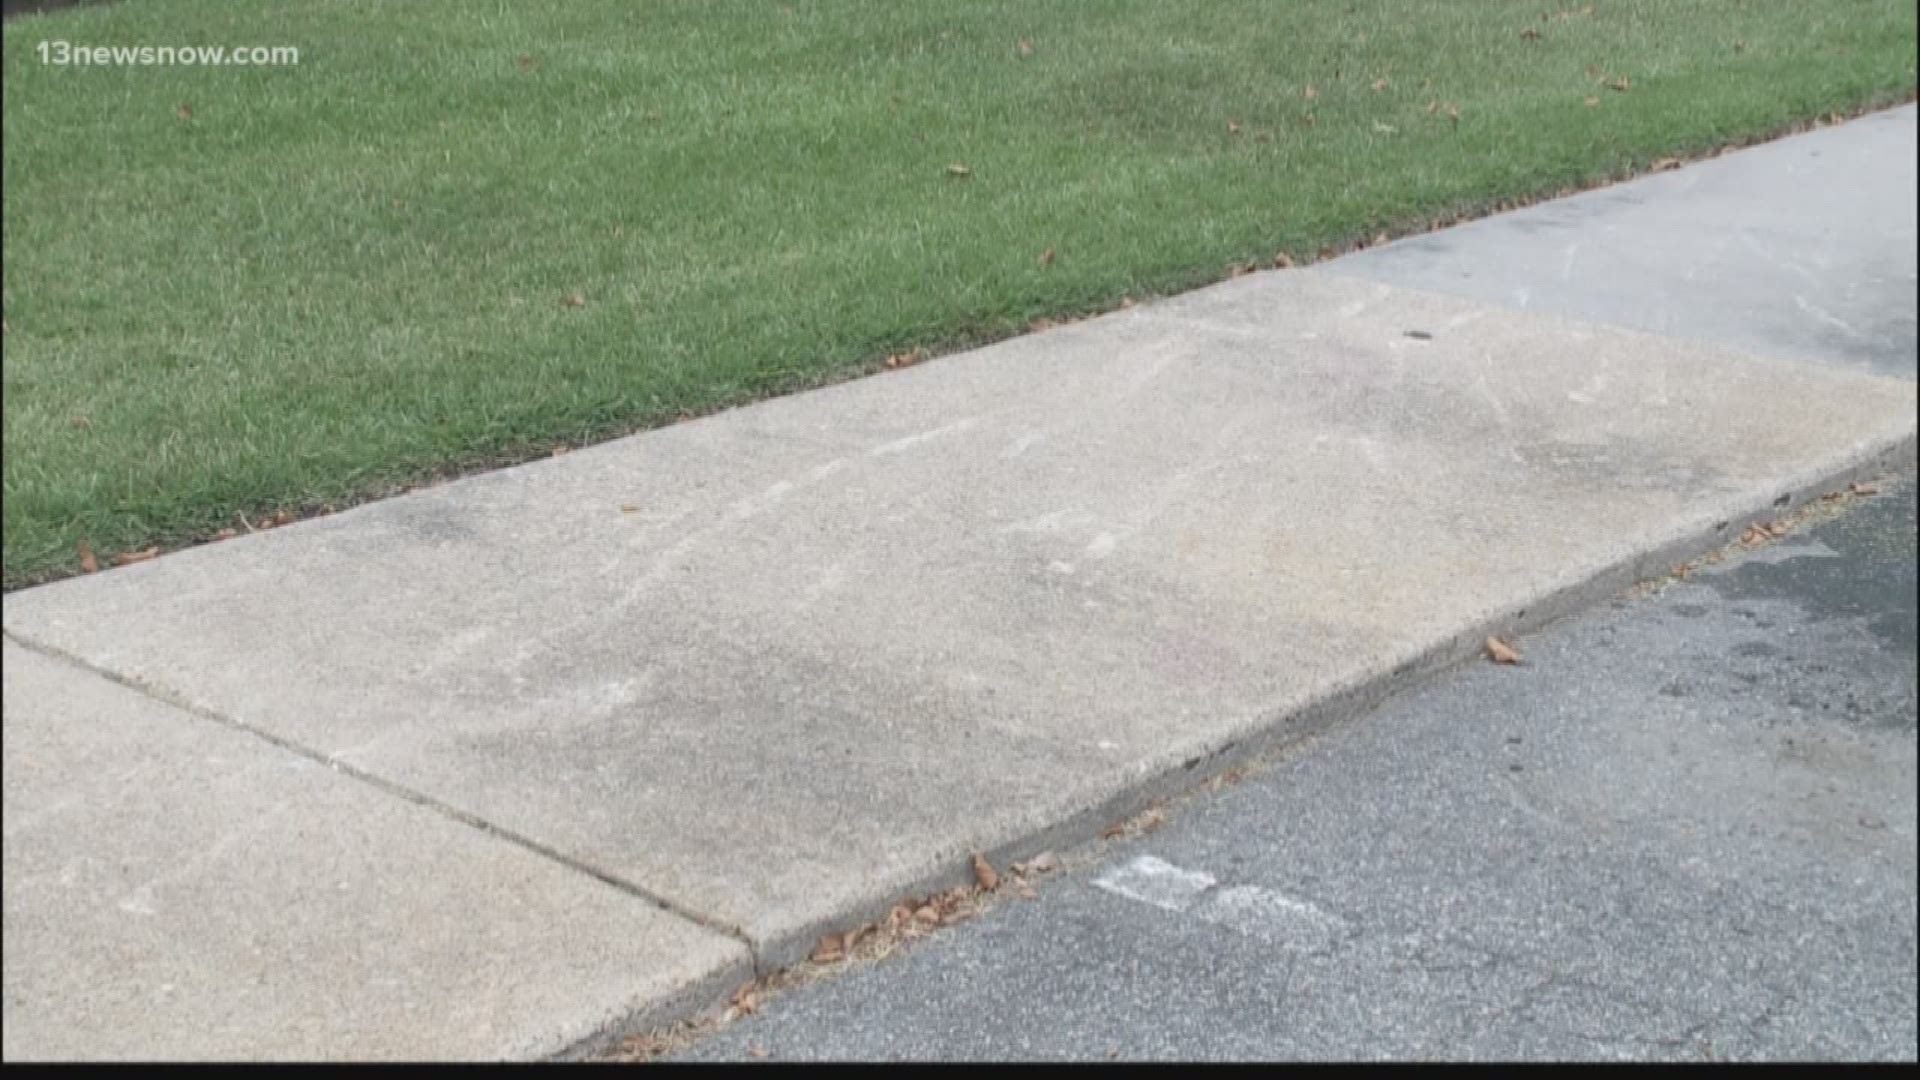 Neighbors got a notice banning sidewalk chalk drawings